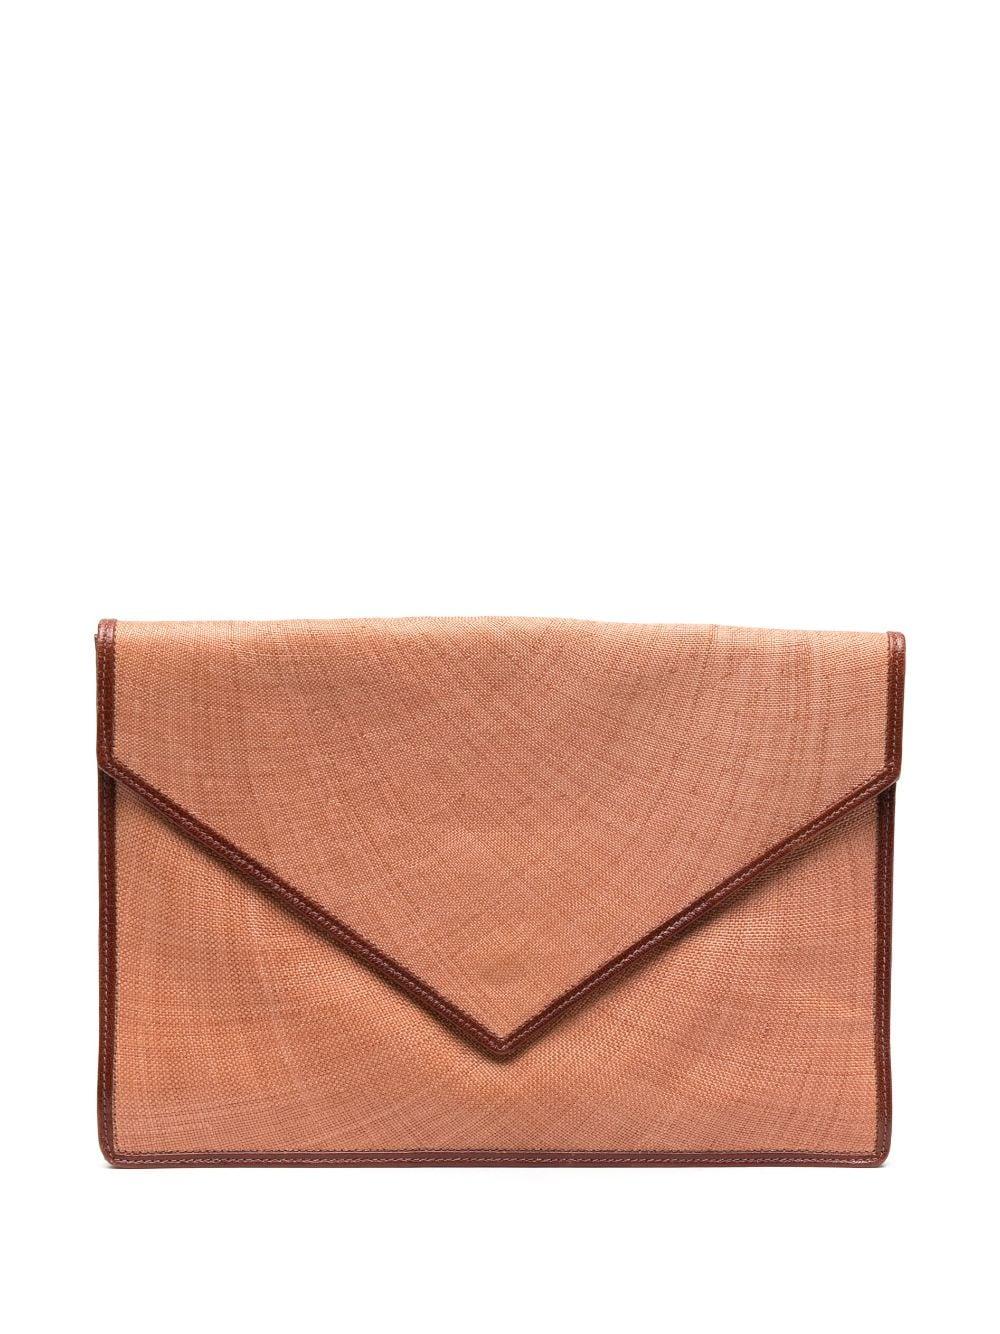 Christian Dior Nude Canvas Envelope Clutch Bag For Sale 2